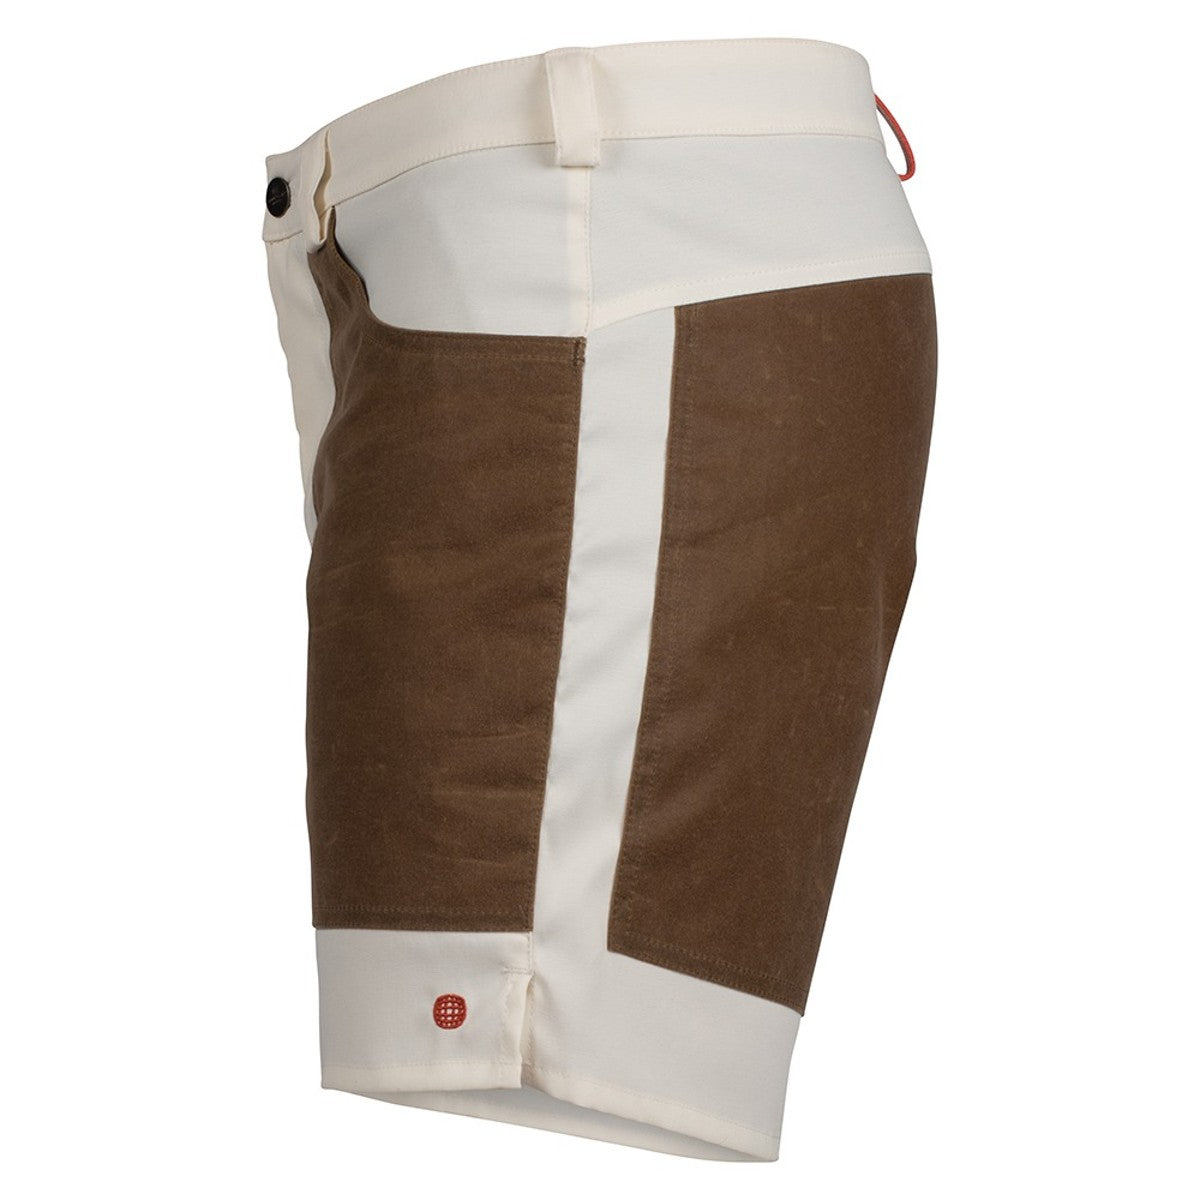 Amundsen Sports - Men's 7 Incher Field Shorts - Offwhite / Tan